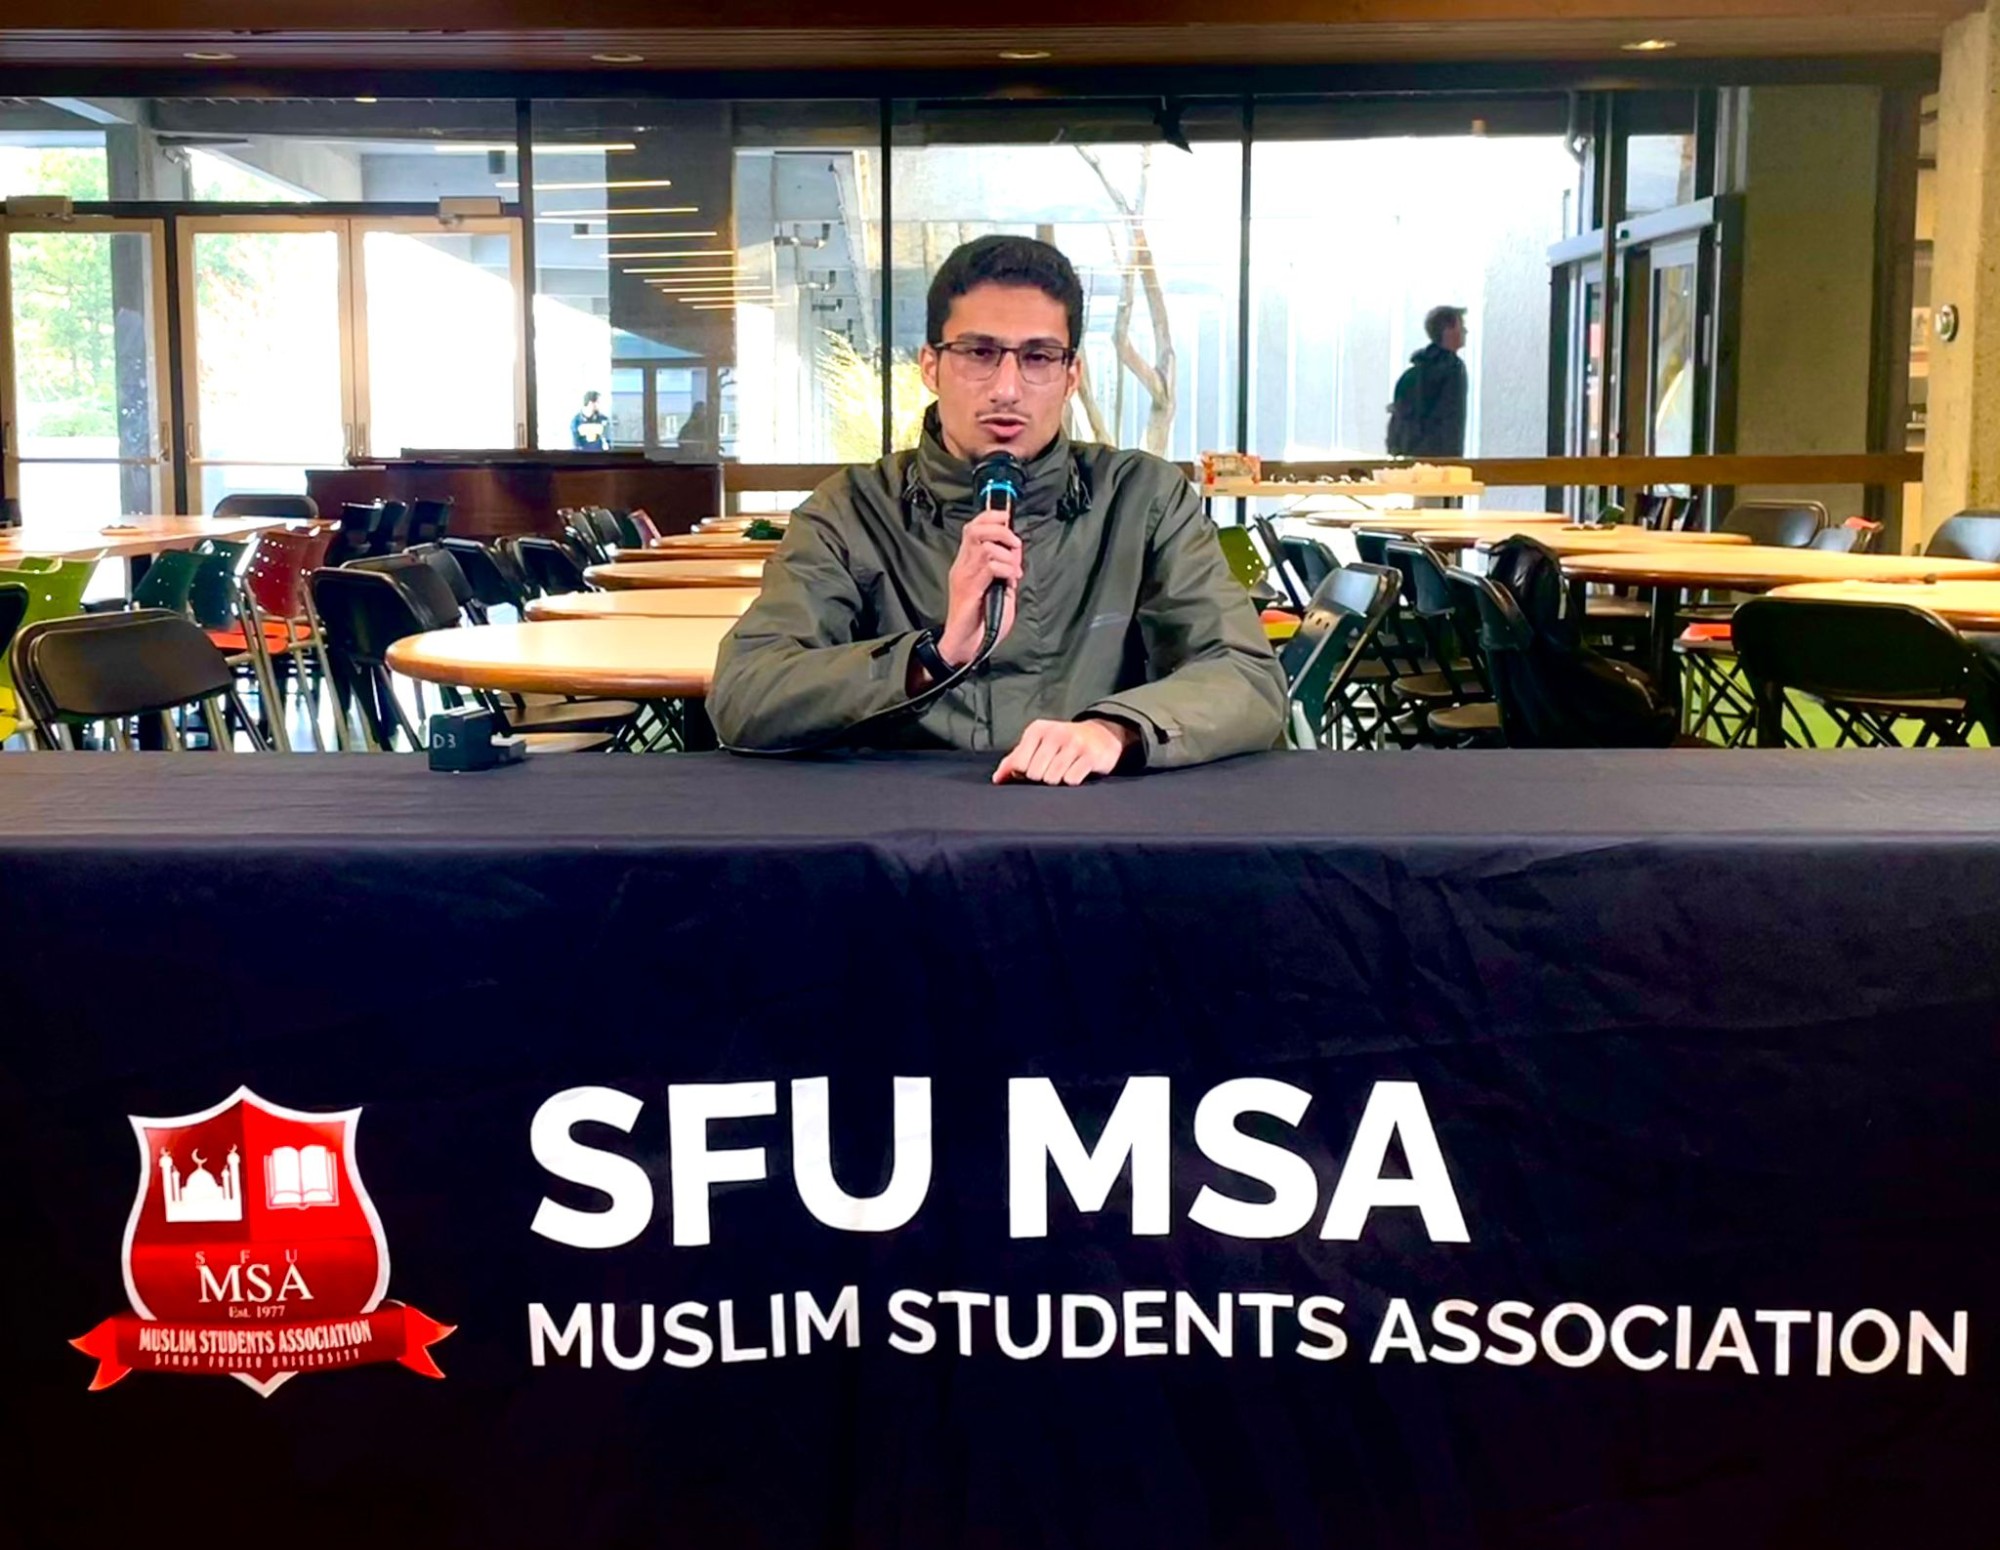 Esam Salahaldeen Abdullah Al-Mohamadi sitting at a table for the Muslim Students Association